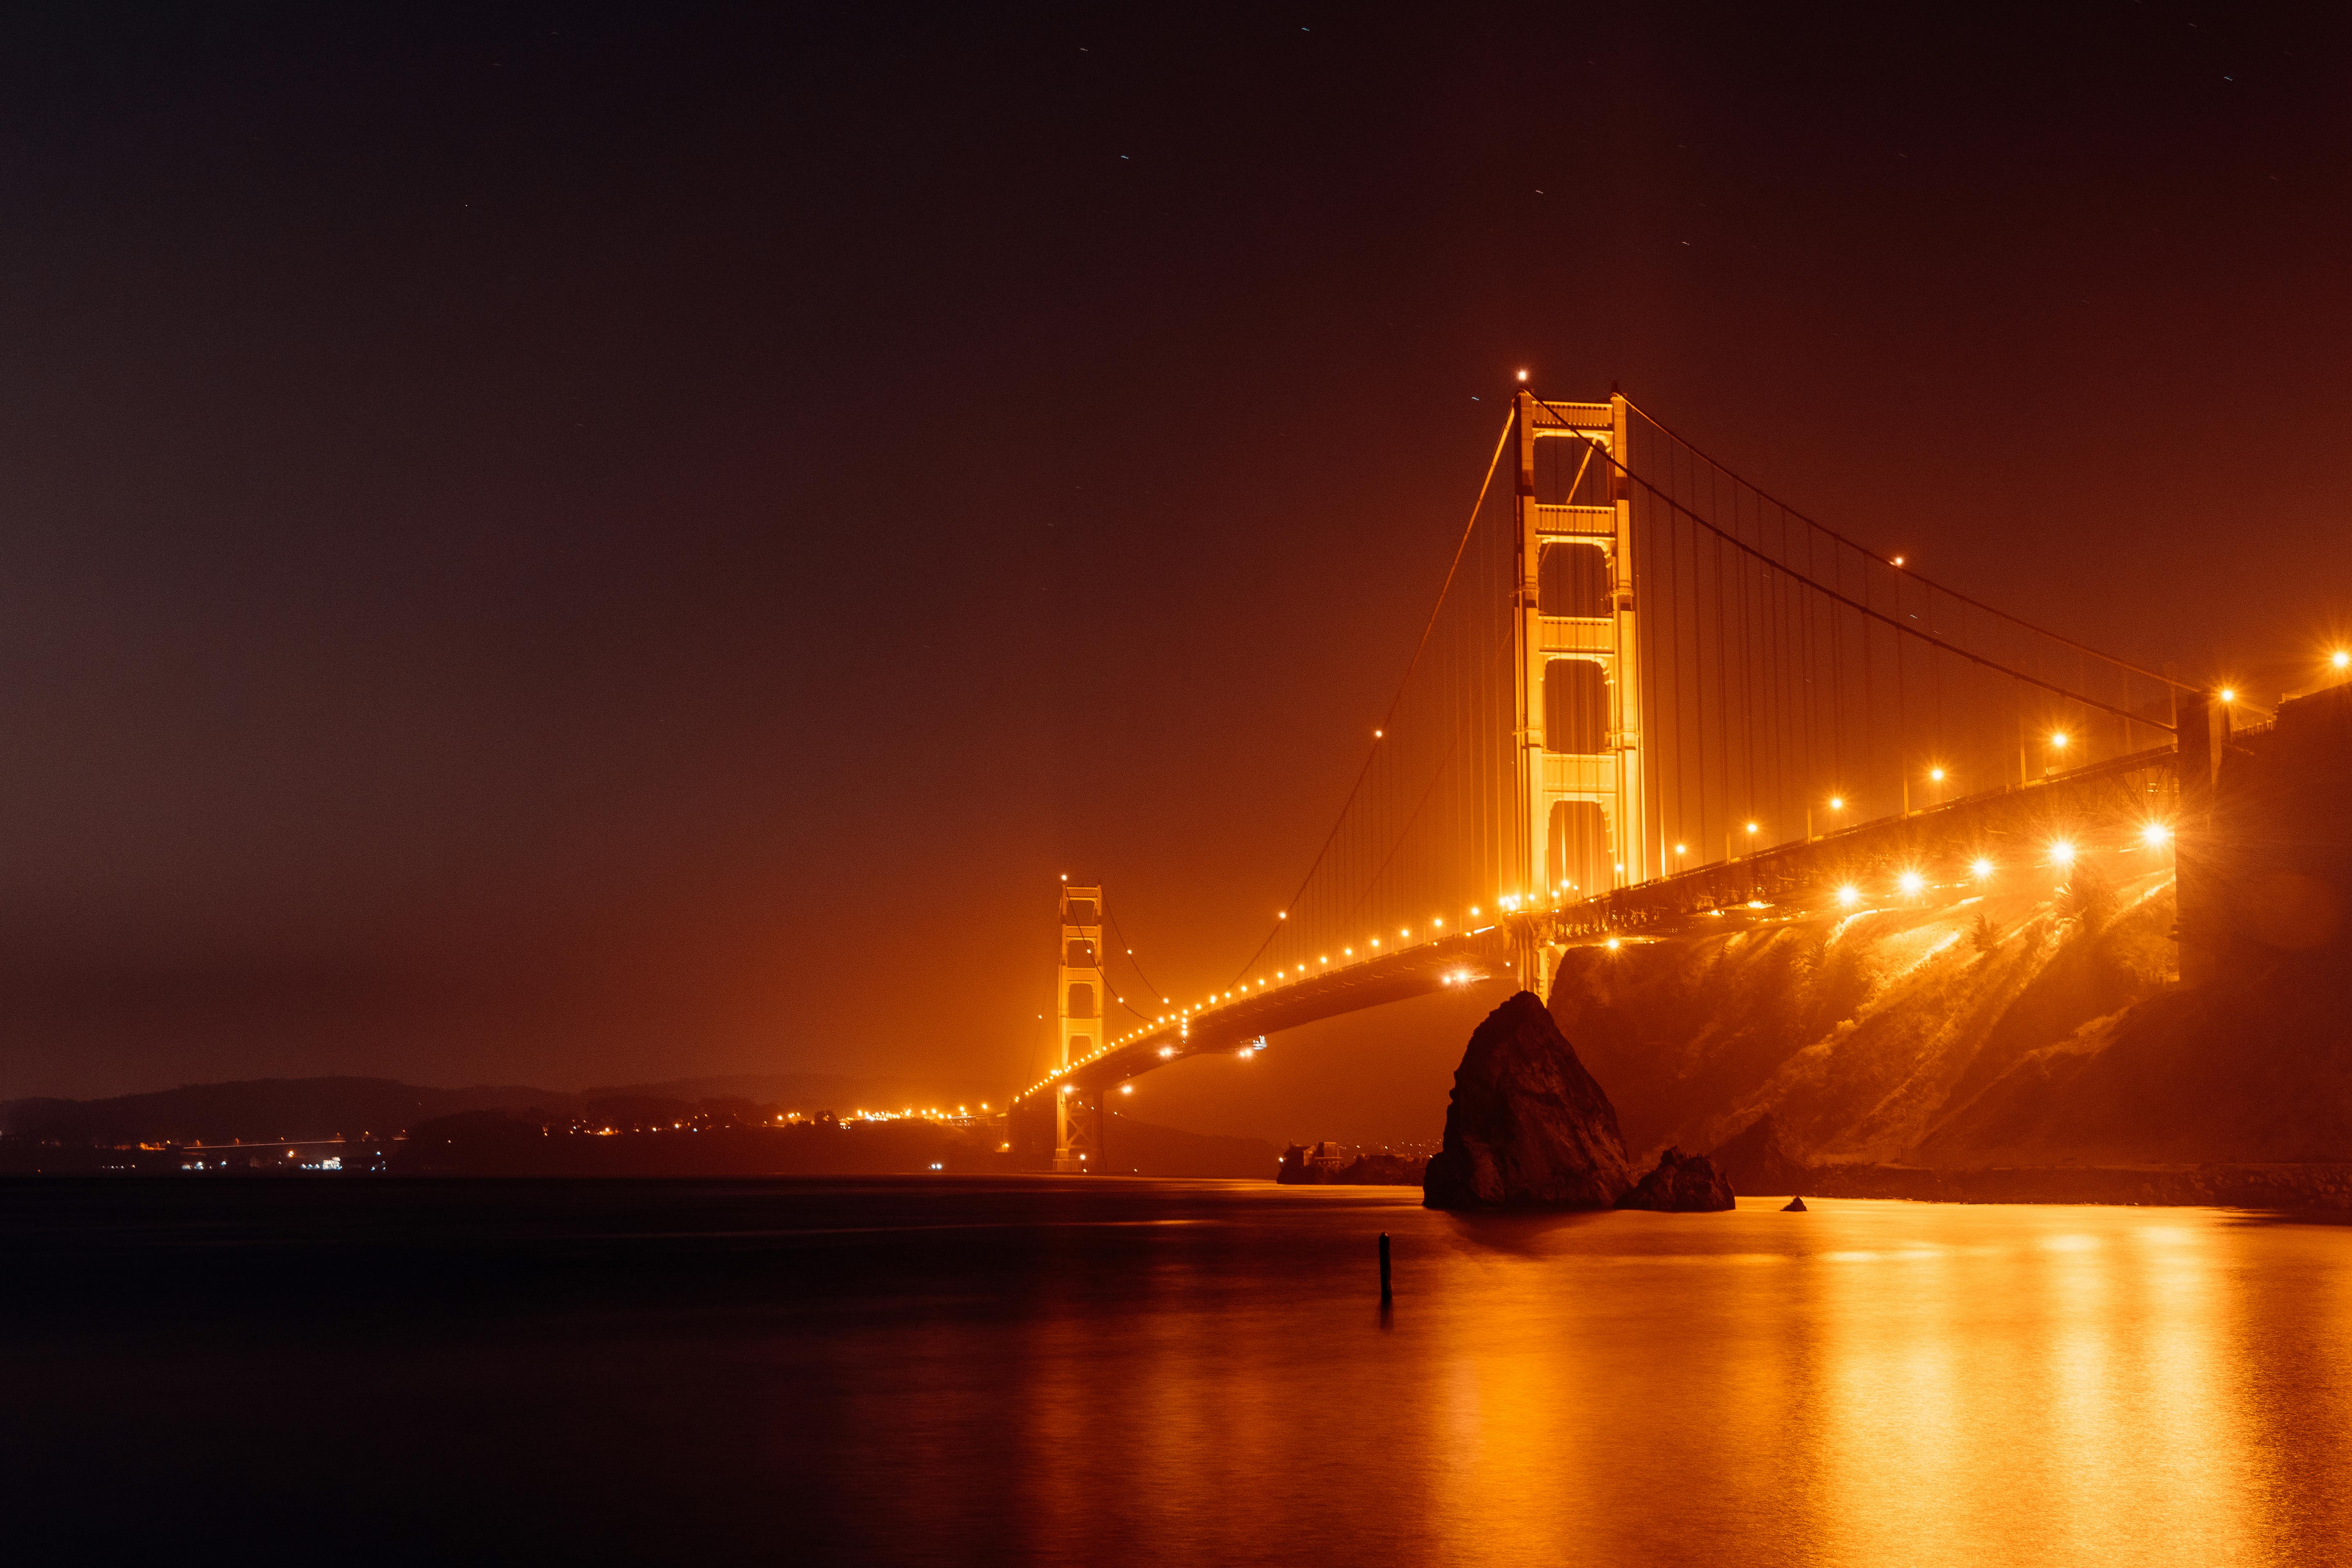 Bright Golden Gate Bridge above water at night